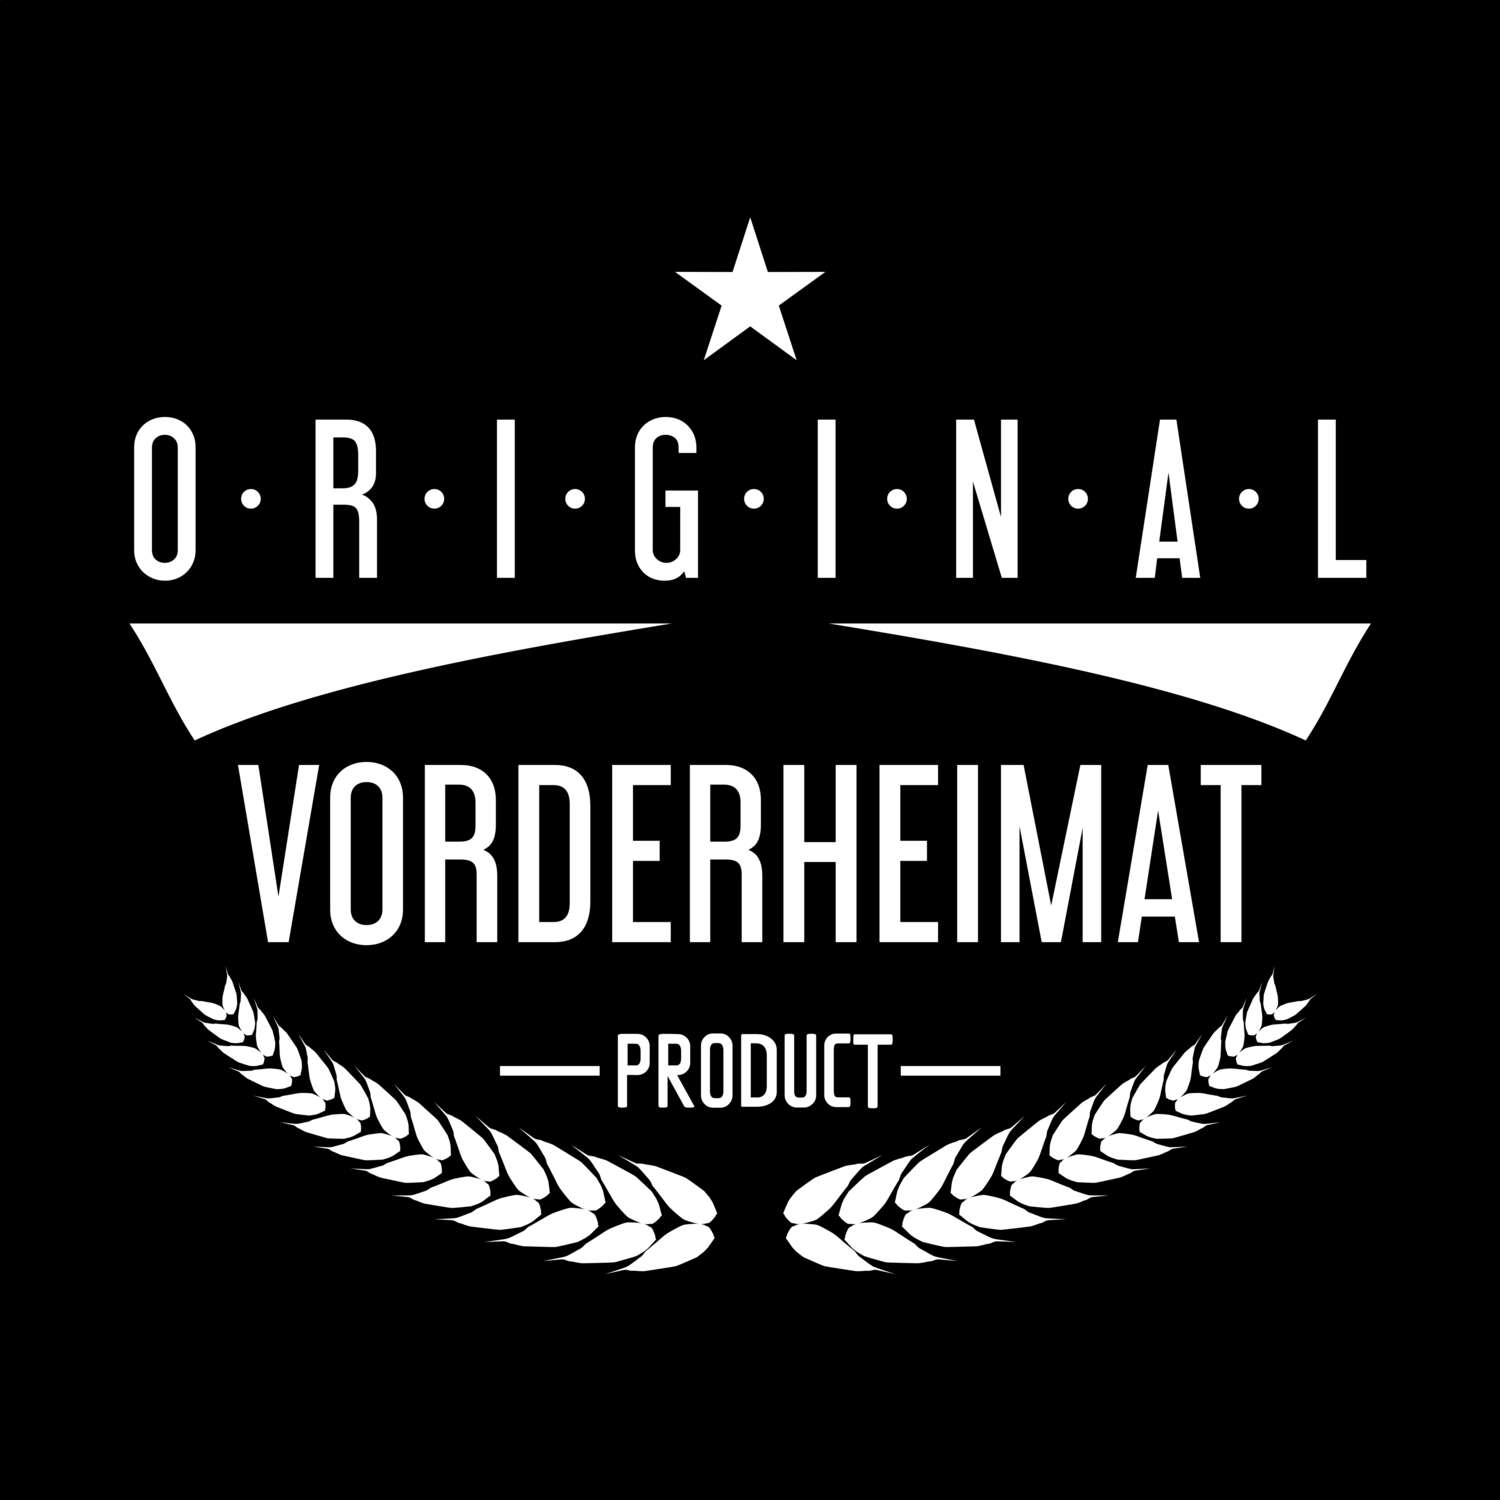 Vorderheimat T-Shirt »Original Product«